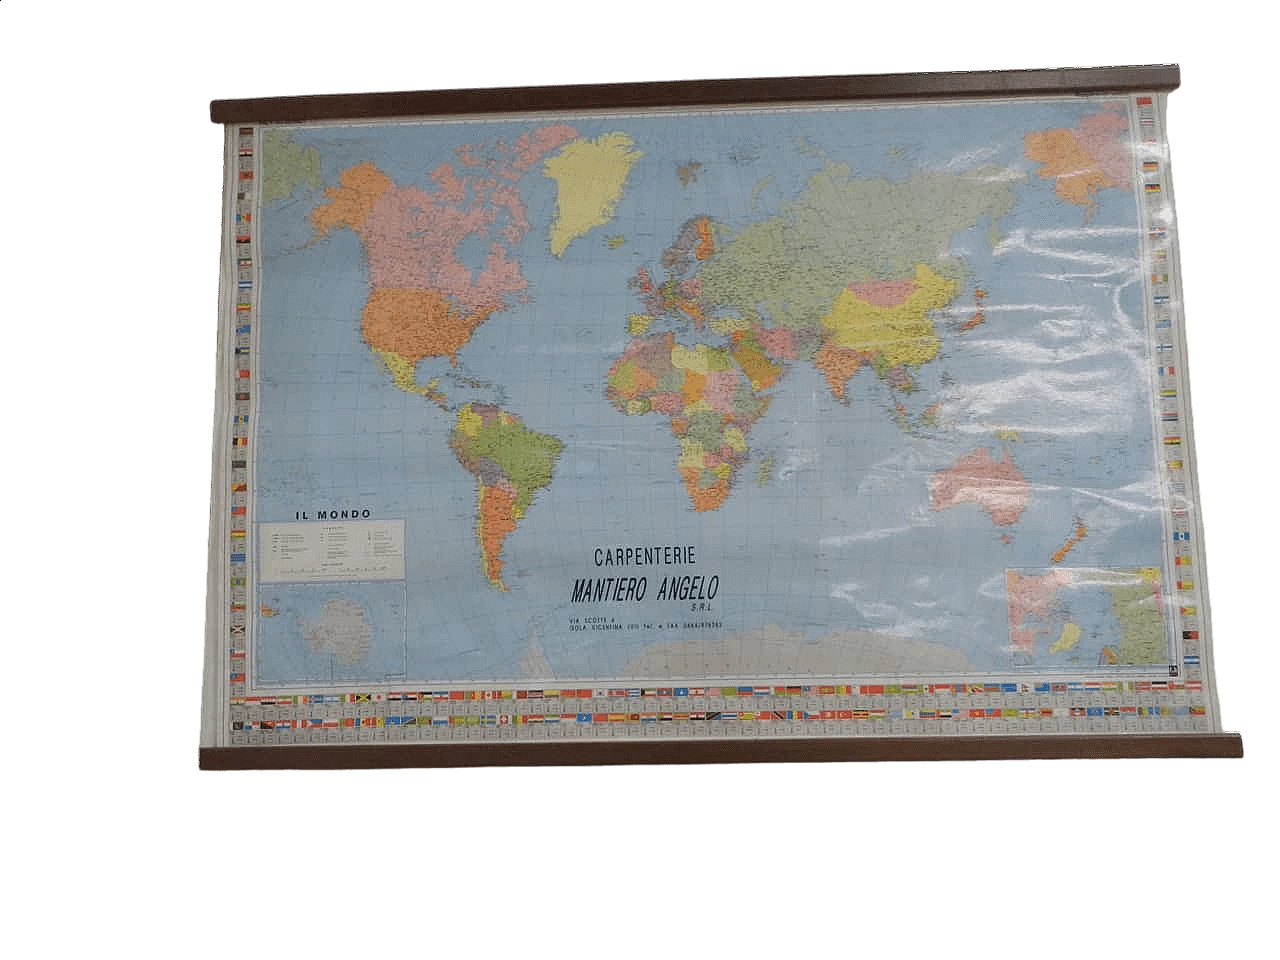 World map by Freytag & Berndt, 1980s 13